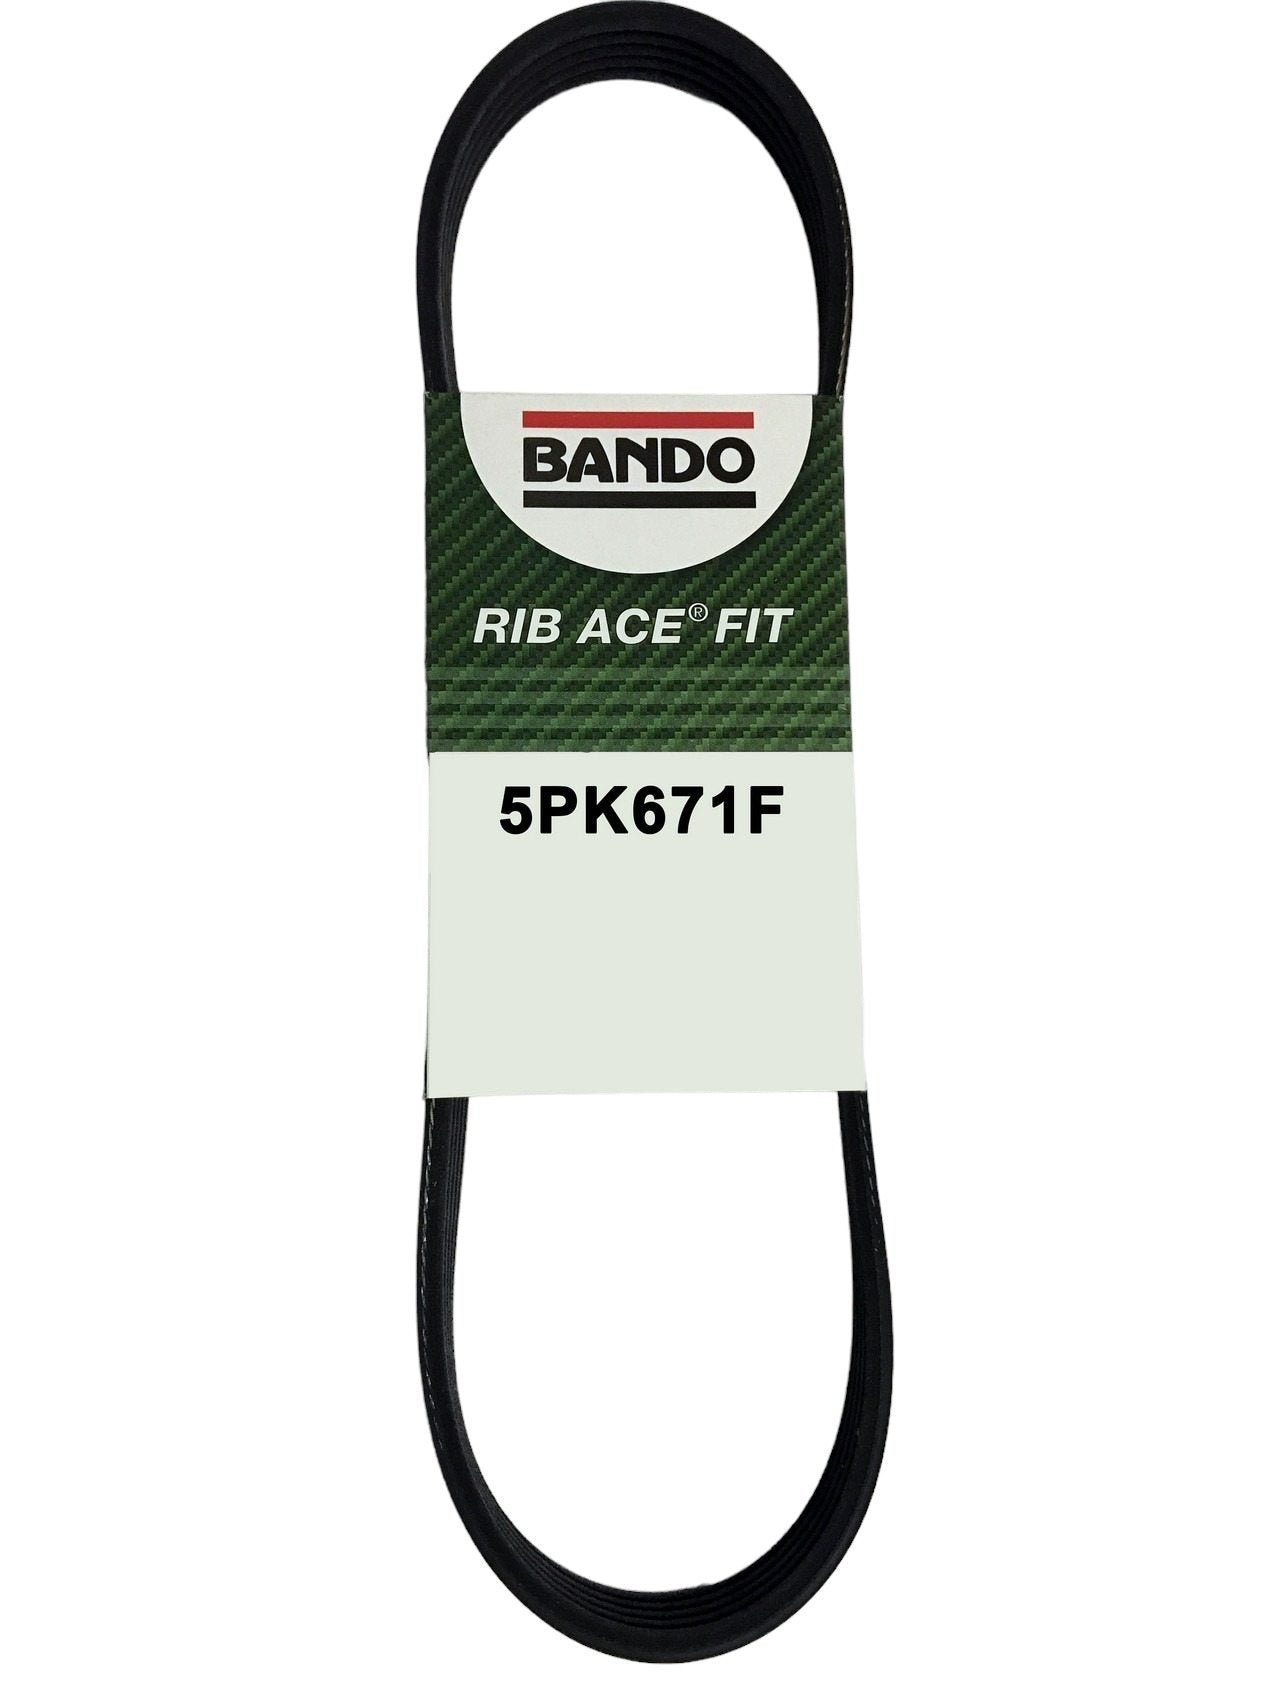 Bando Rib Ace Fit Precision Engineered FIT V-Ribbed Belt 5PK671F